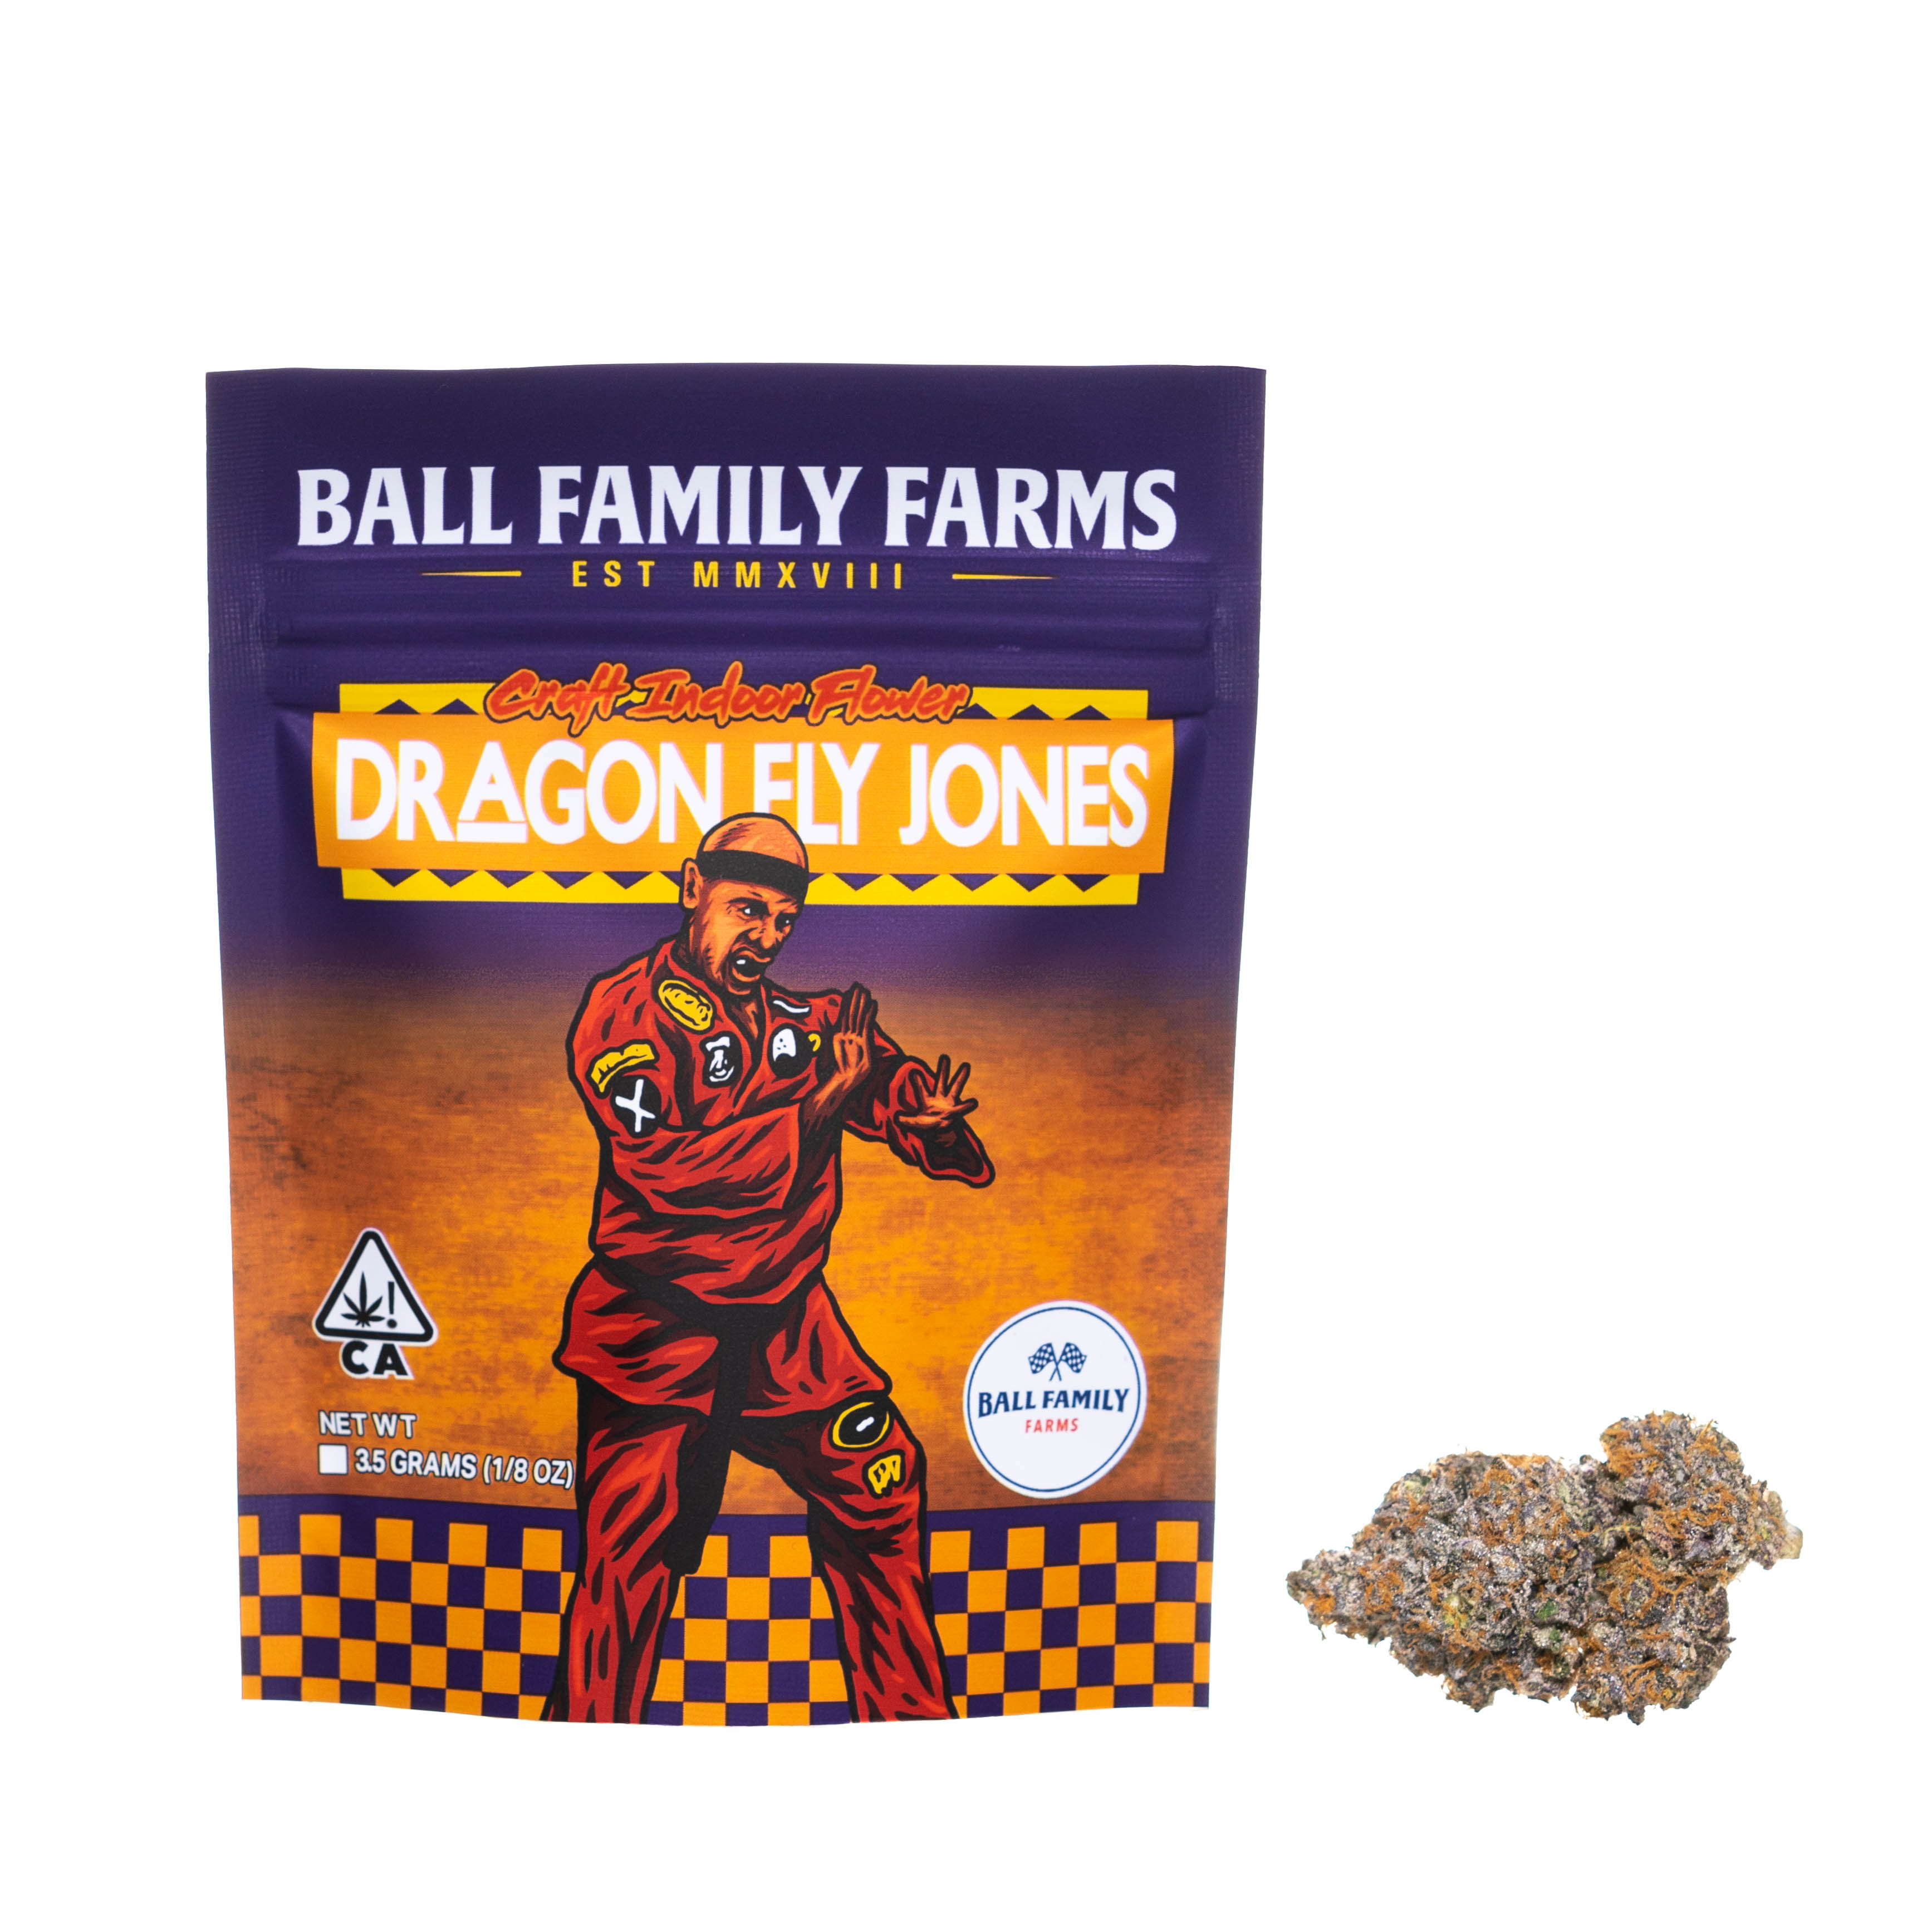 Ball Family Farms Dragonfly Jones Hybrid